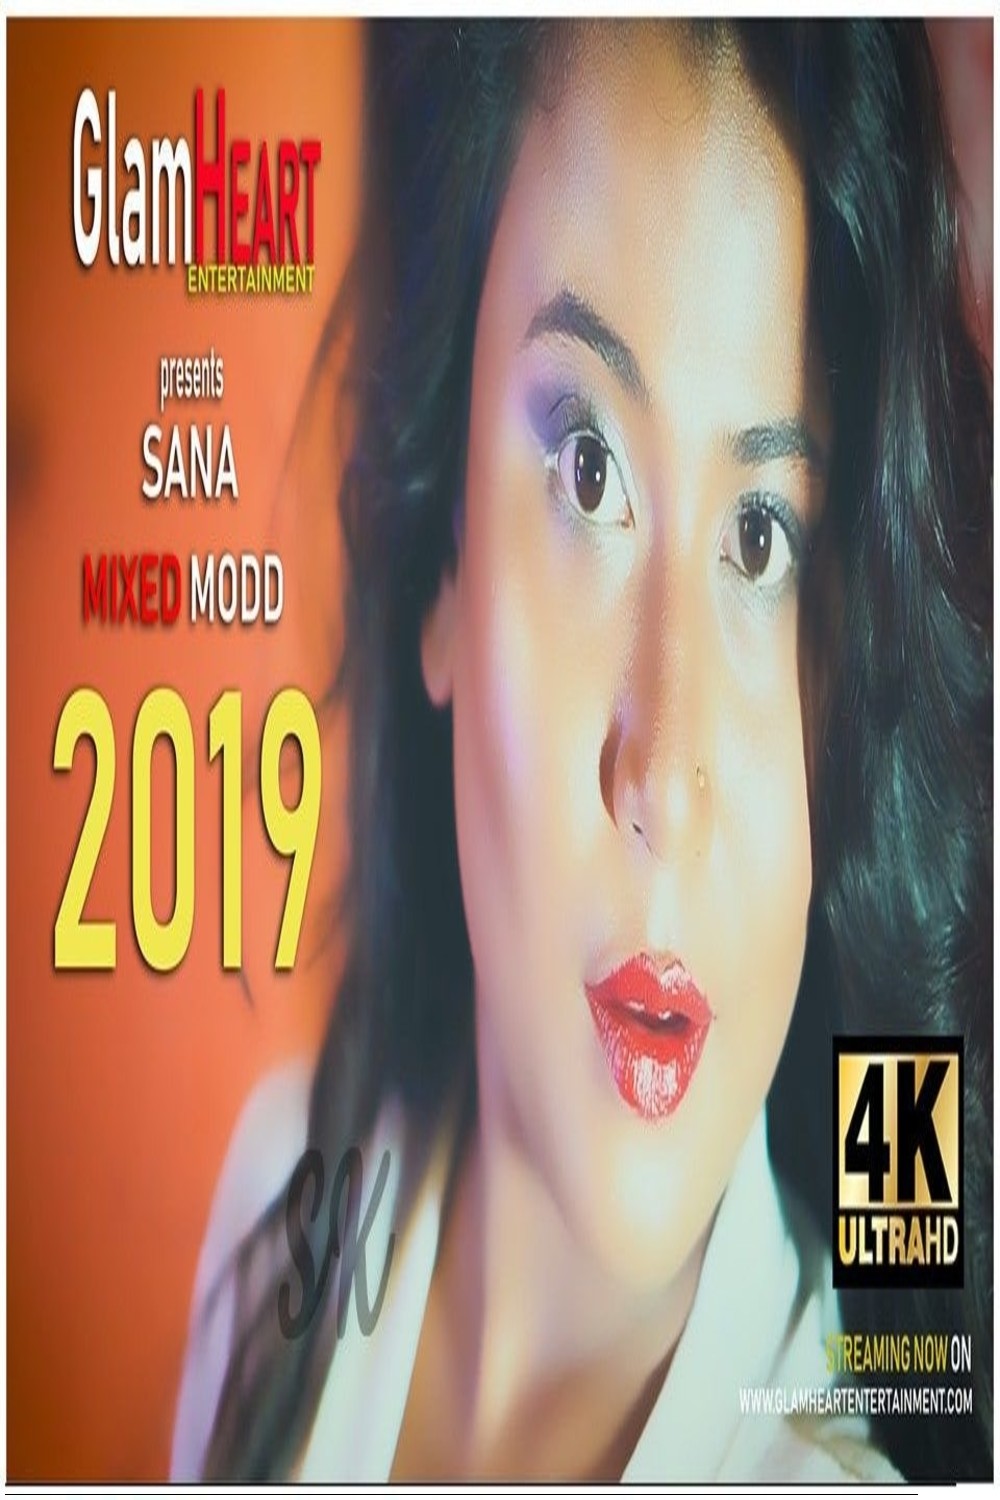 [18+] Sana Mixed Mood (2019) Glam Heart Entertainment Video | 1080p – 720p – 480p HDRip x264 Download